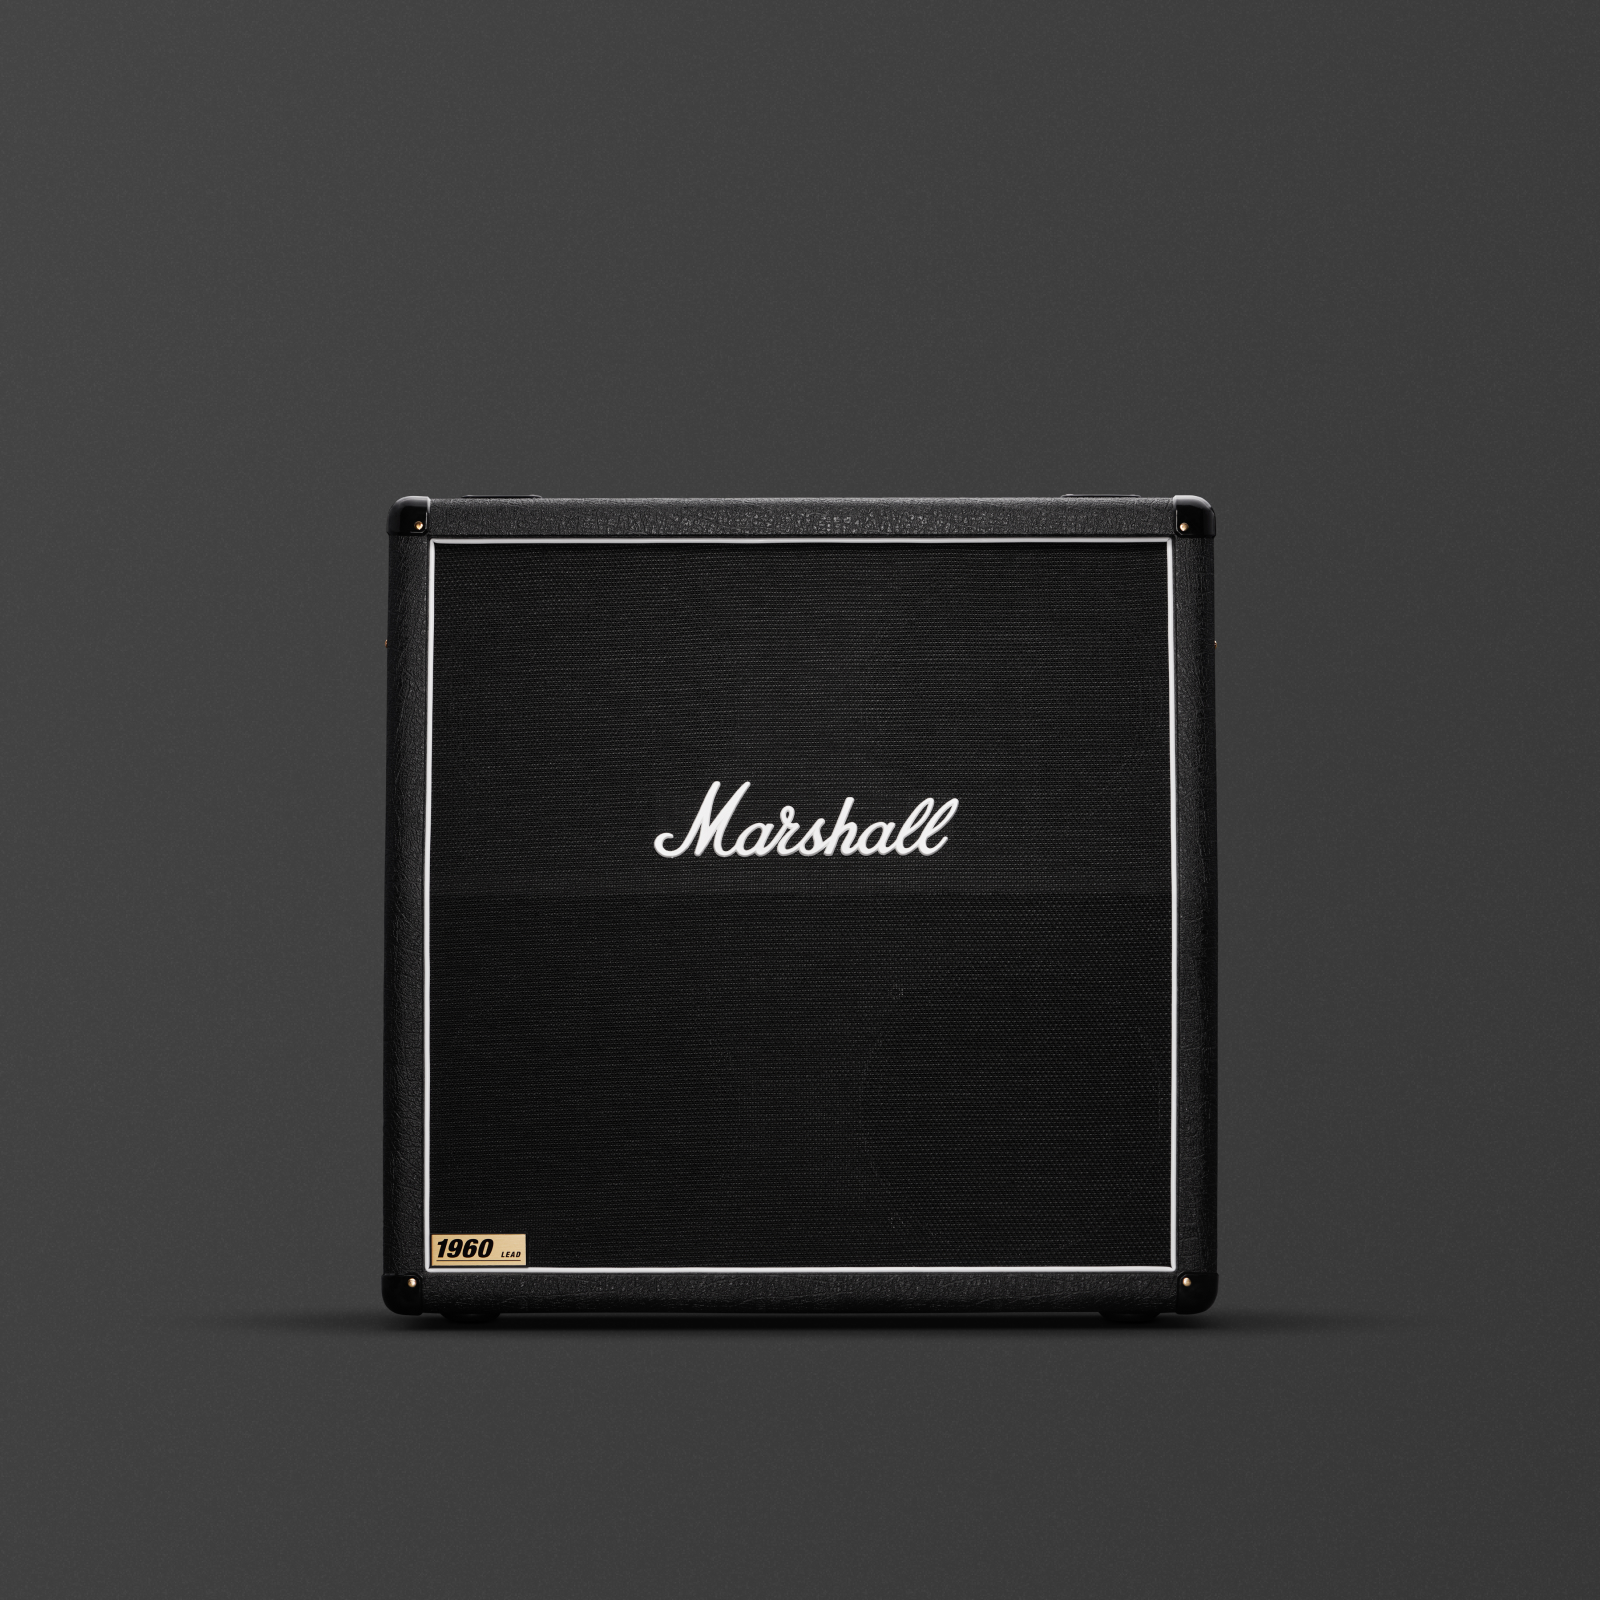 Marshall's 1960A. schwarzes Gehäuse.  